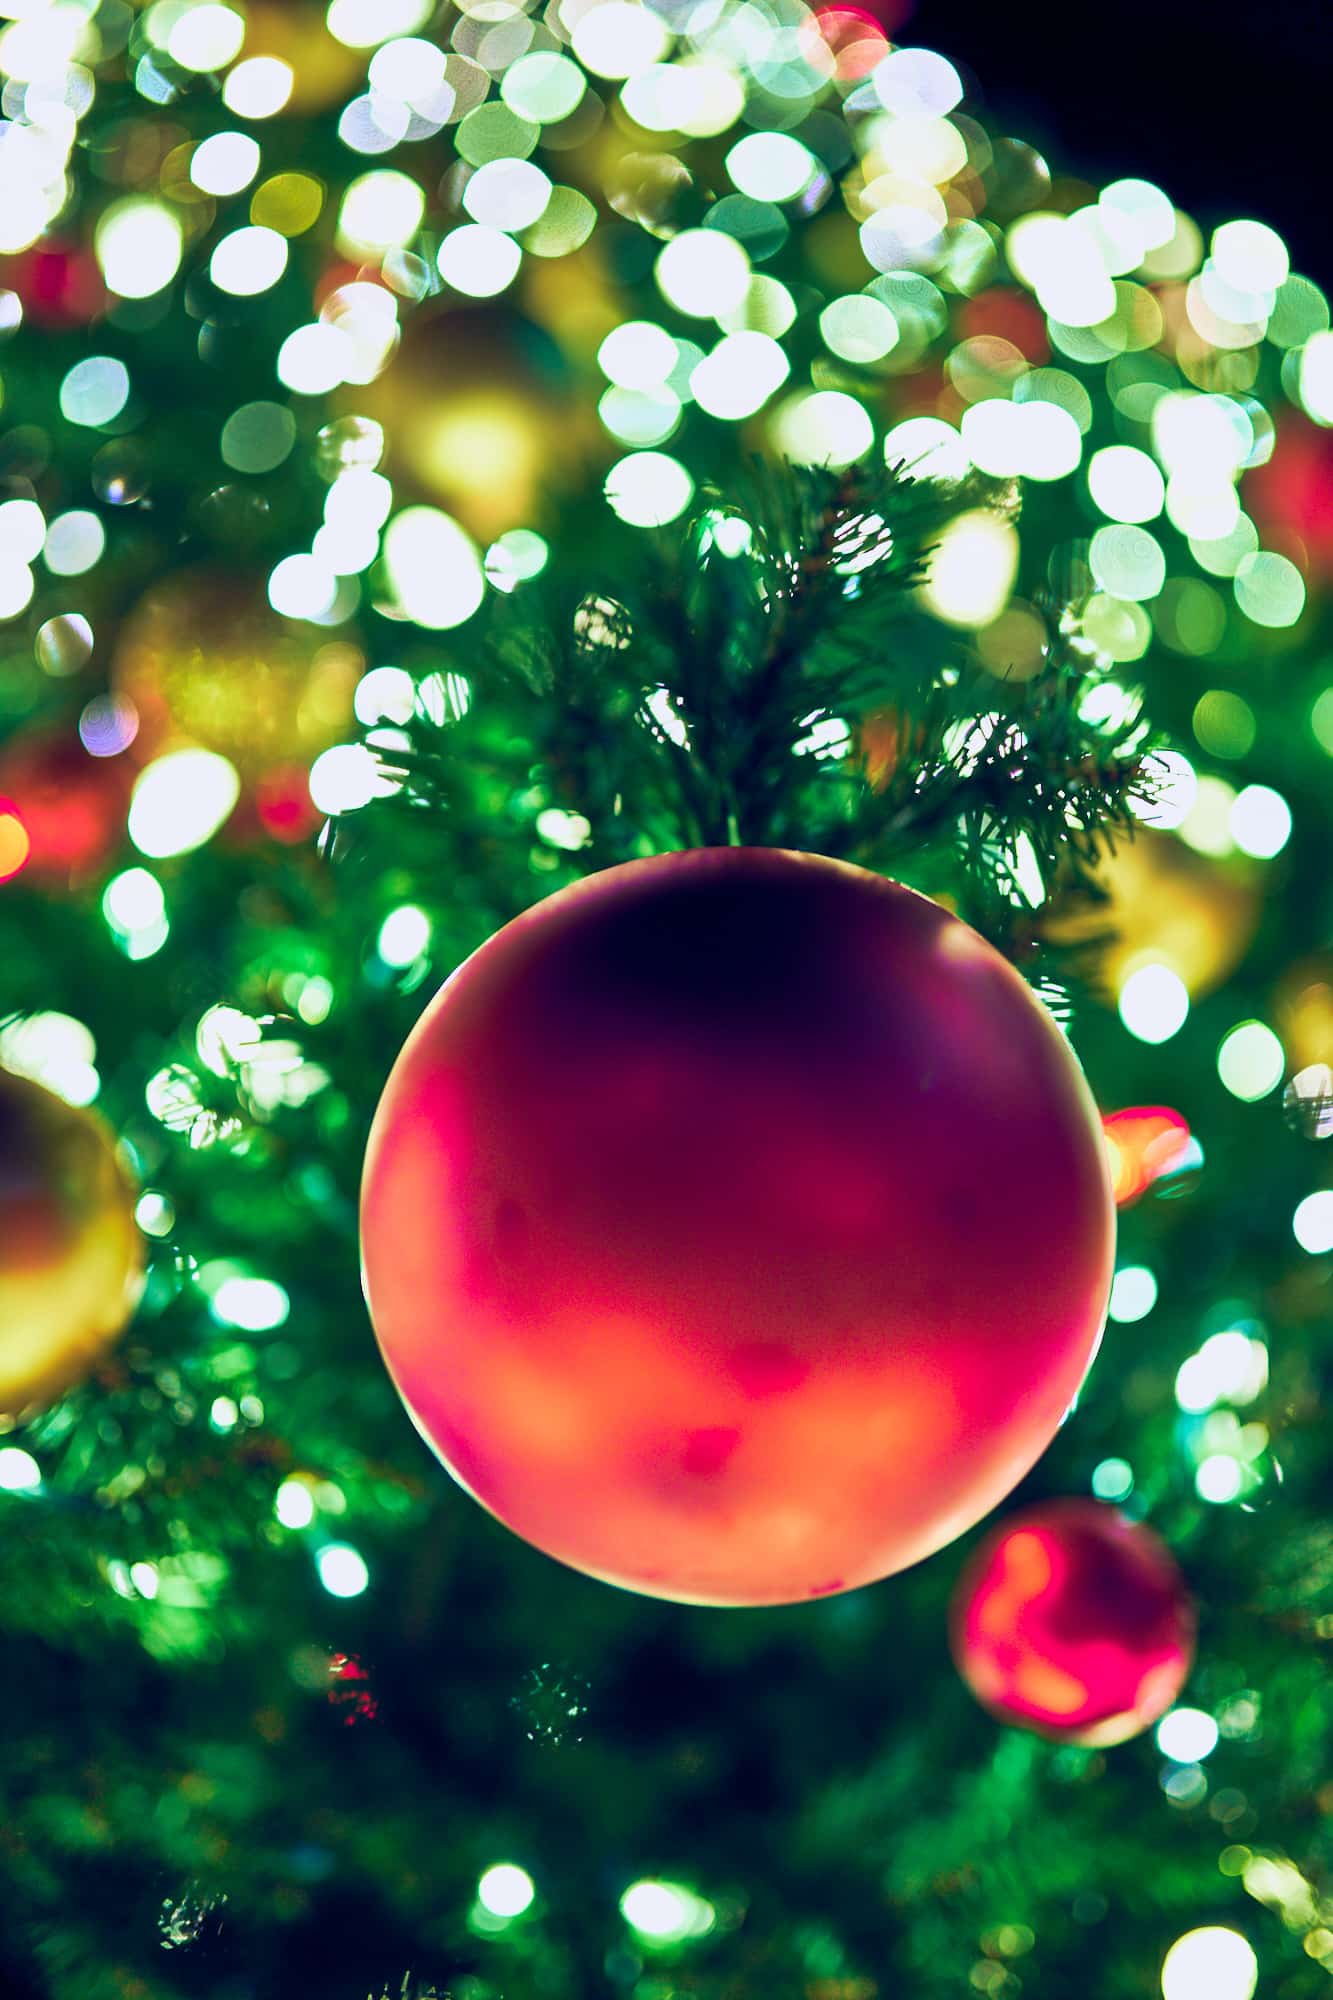 Wishing you a Merry “Saint Armands” Christmas Season from Thru My Eyes